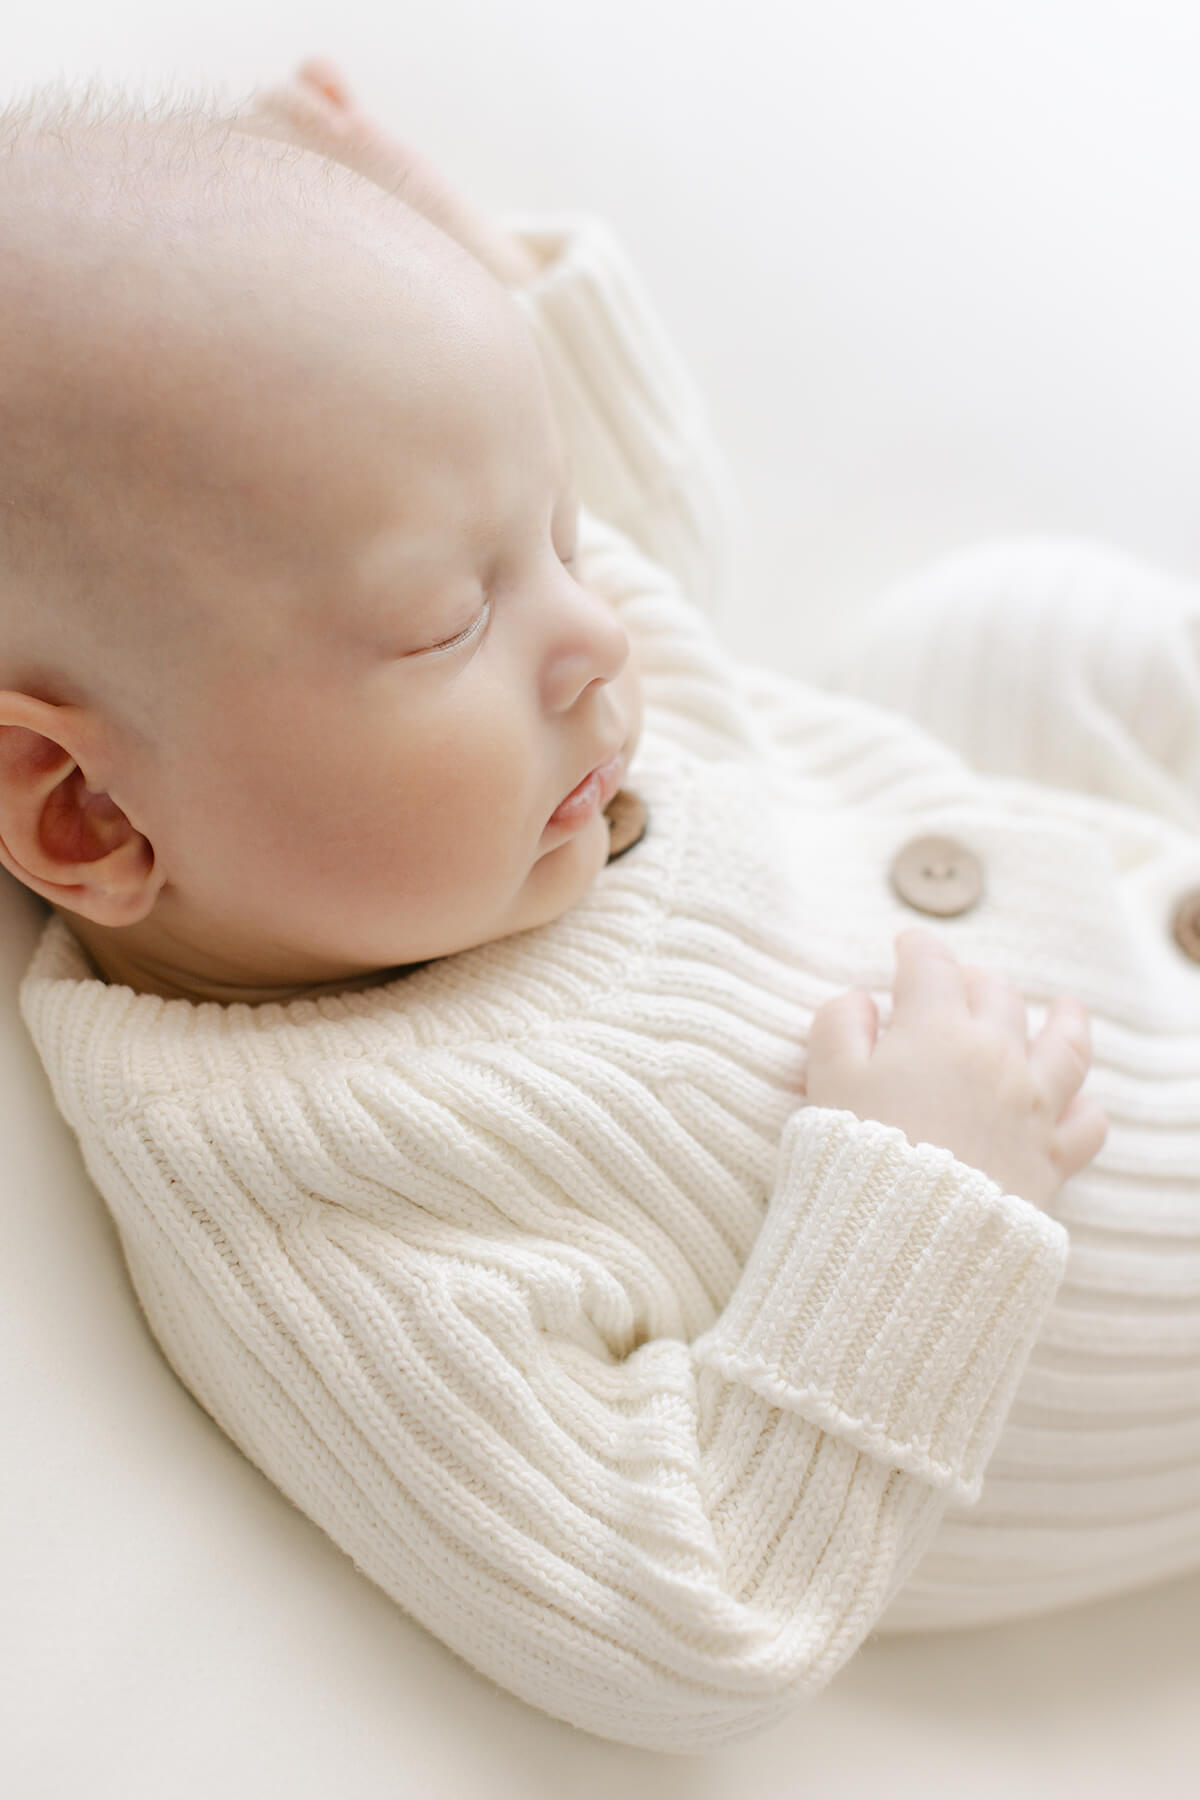 stunning image of sweet local omaha newborn wearing a knit organic romper